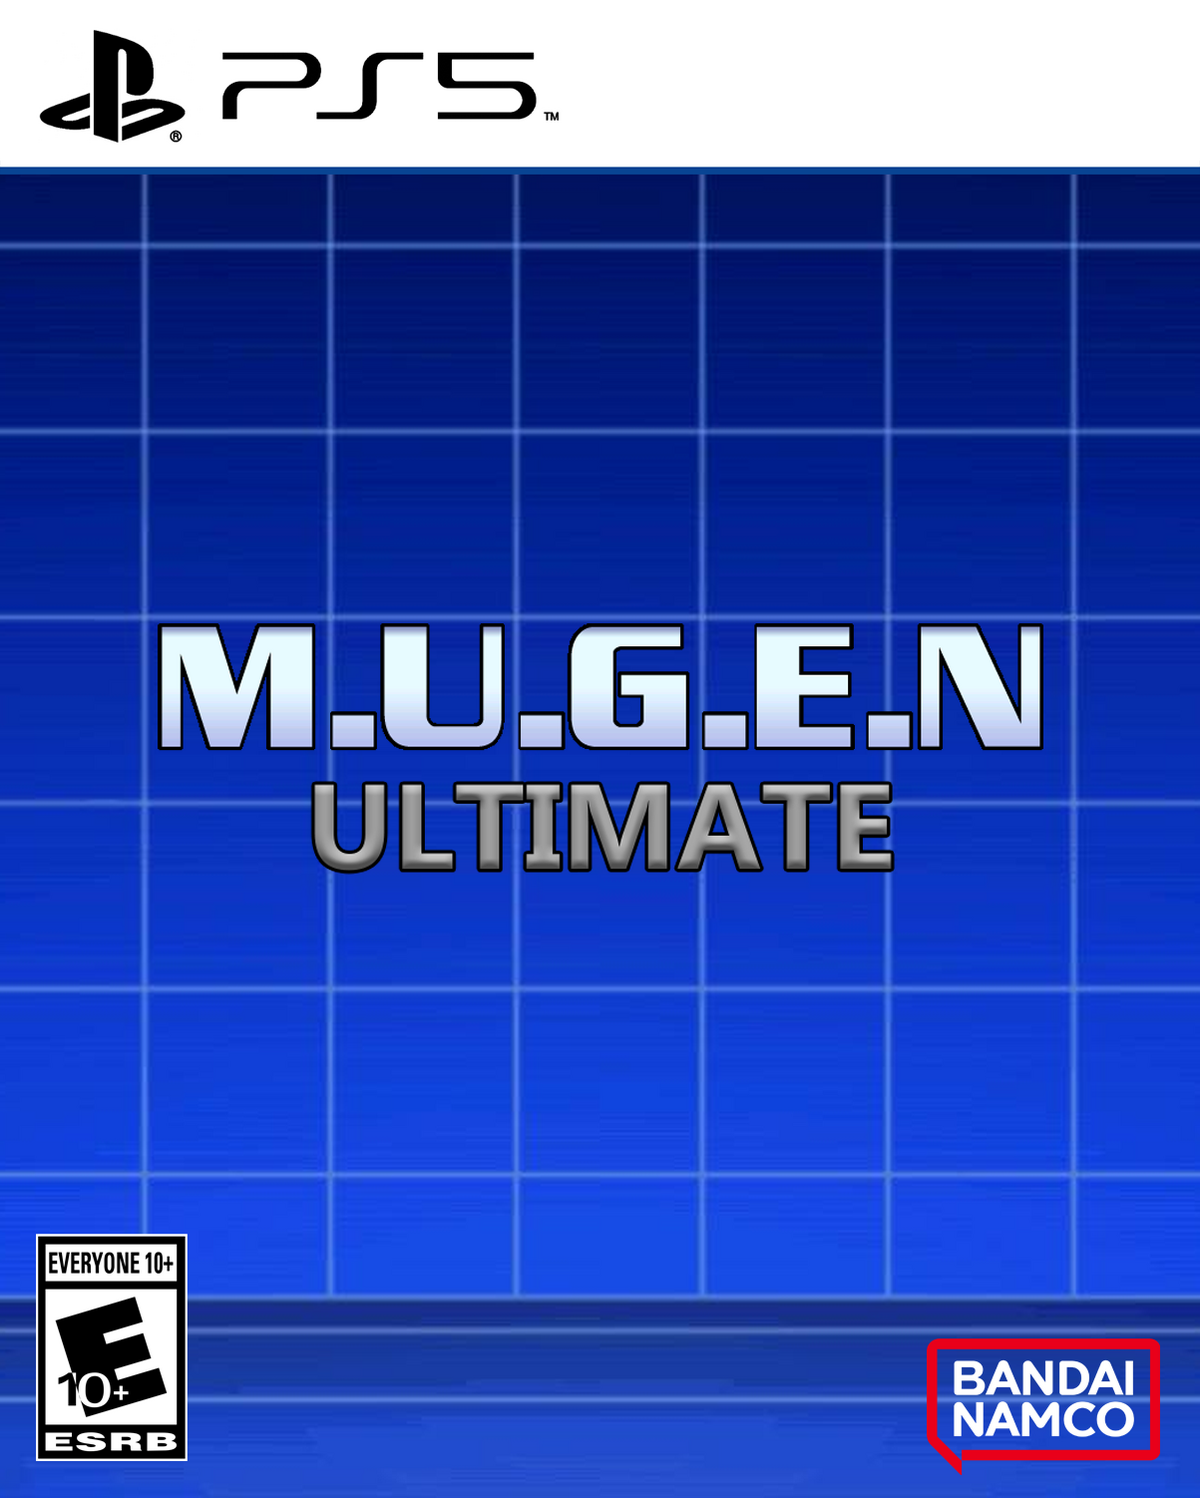 Mugen: Console Edition, Video Games Fanon Wiki